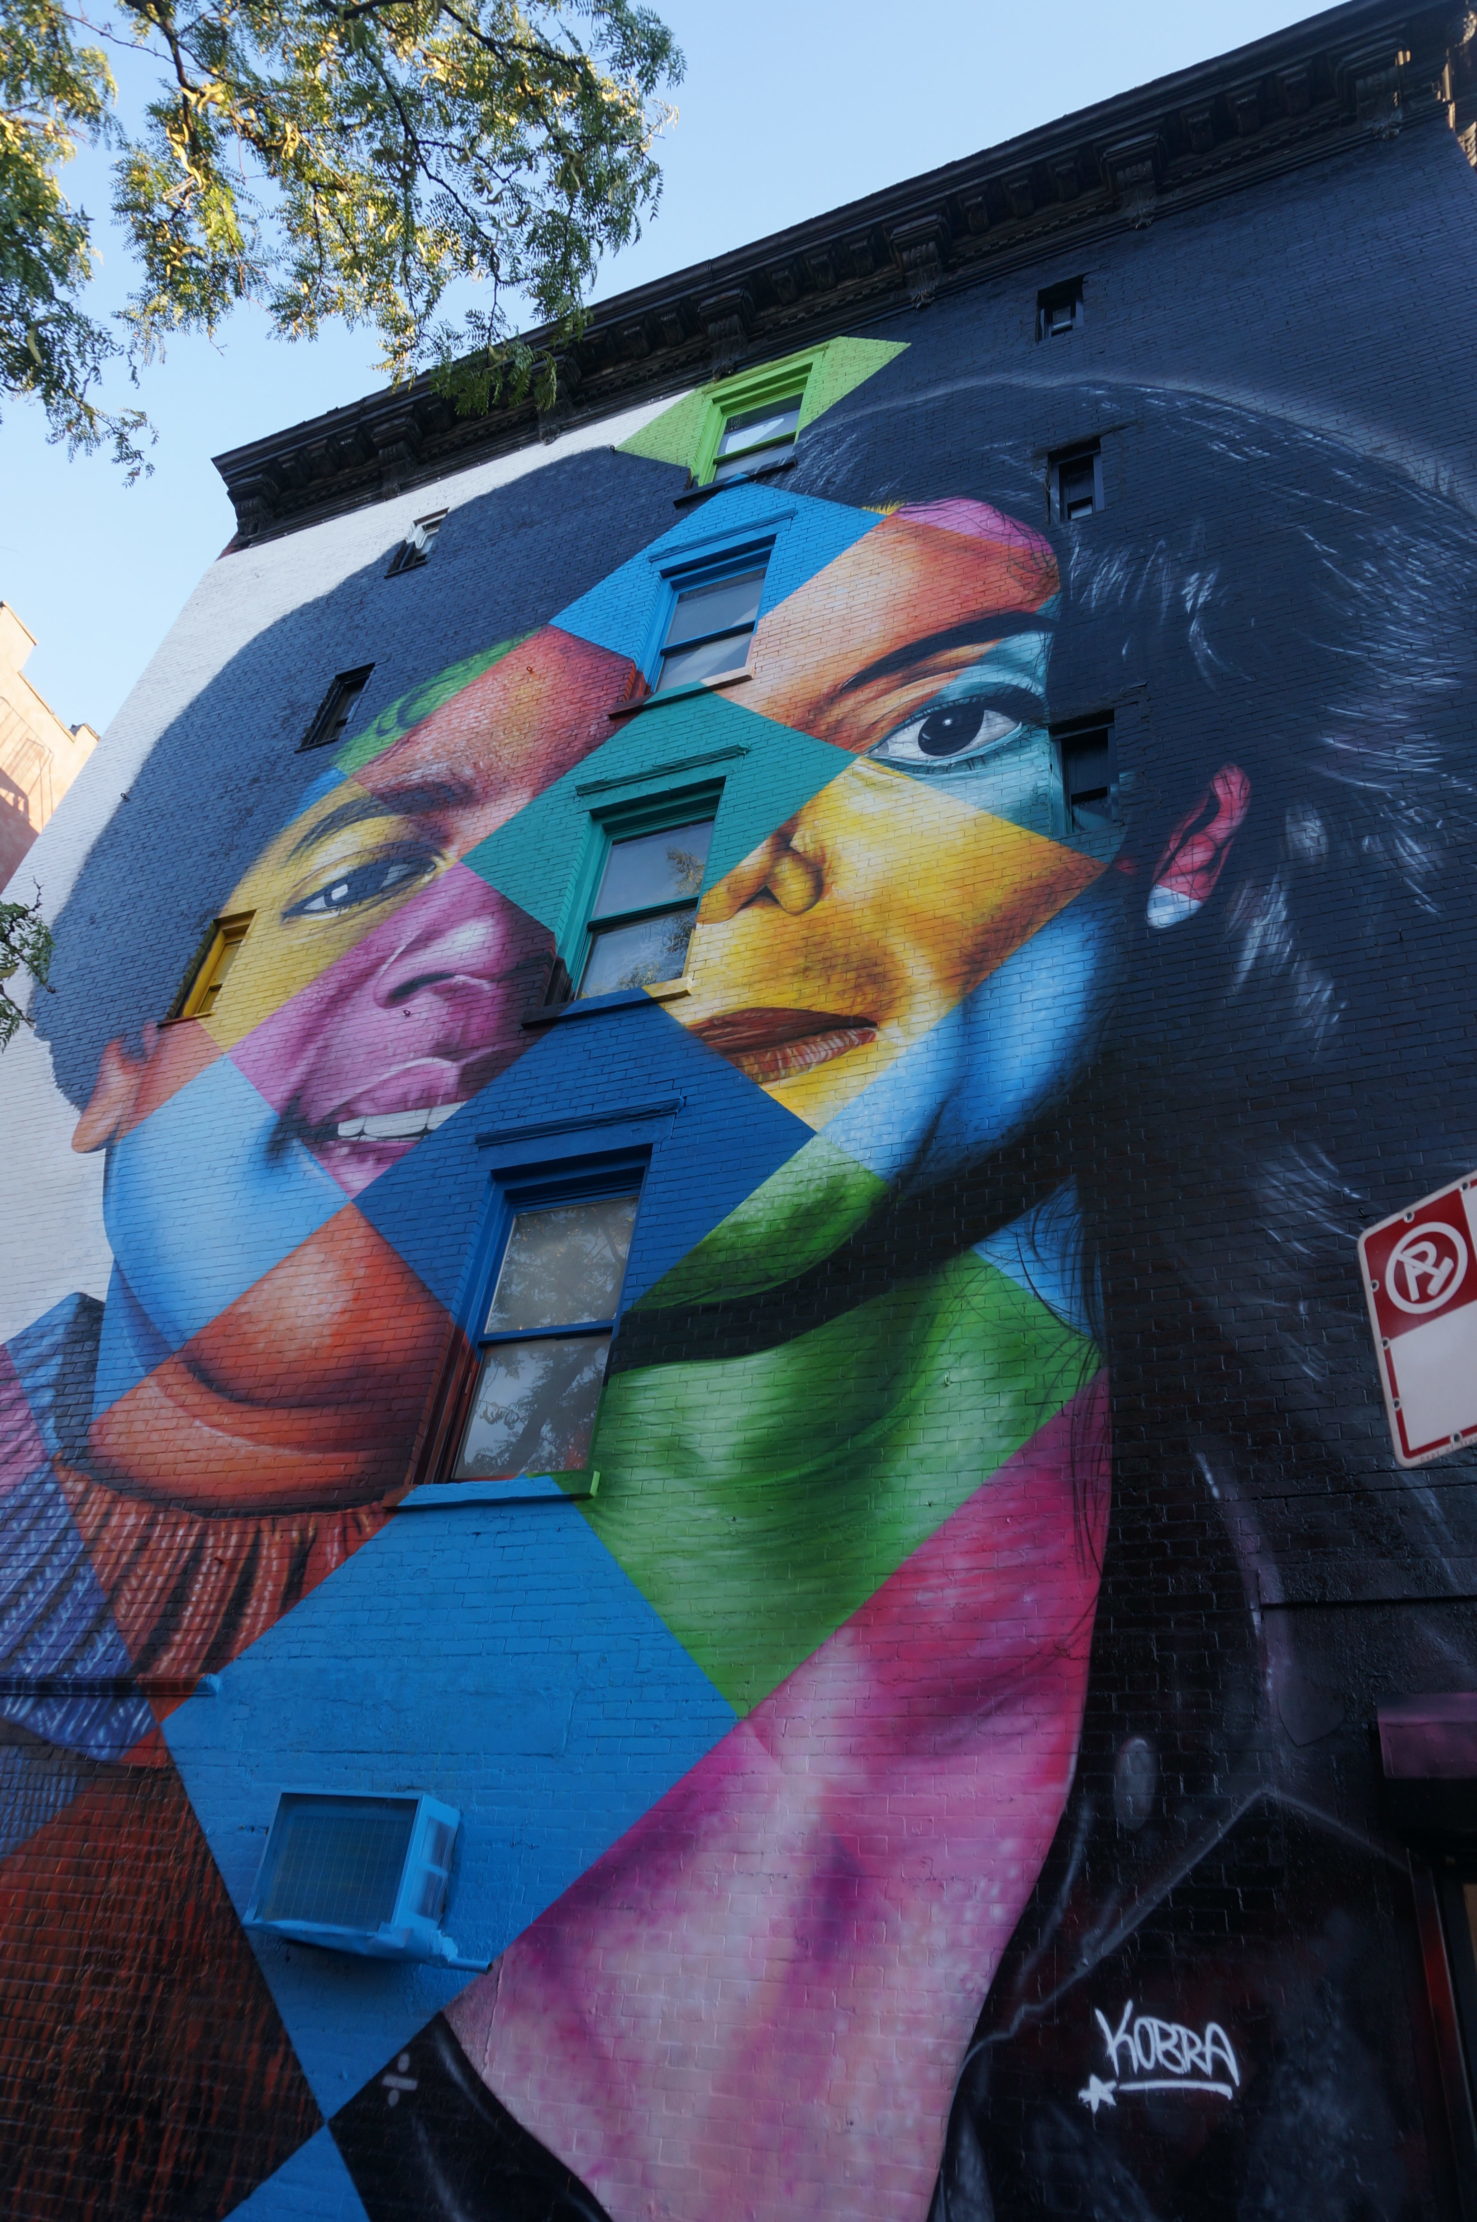 king of street art, eduardo kobra, brilliantly captures the king